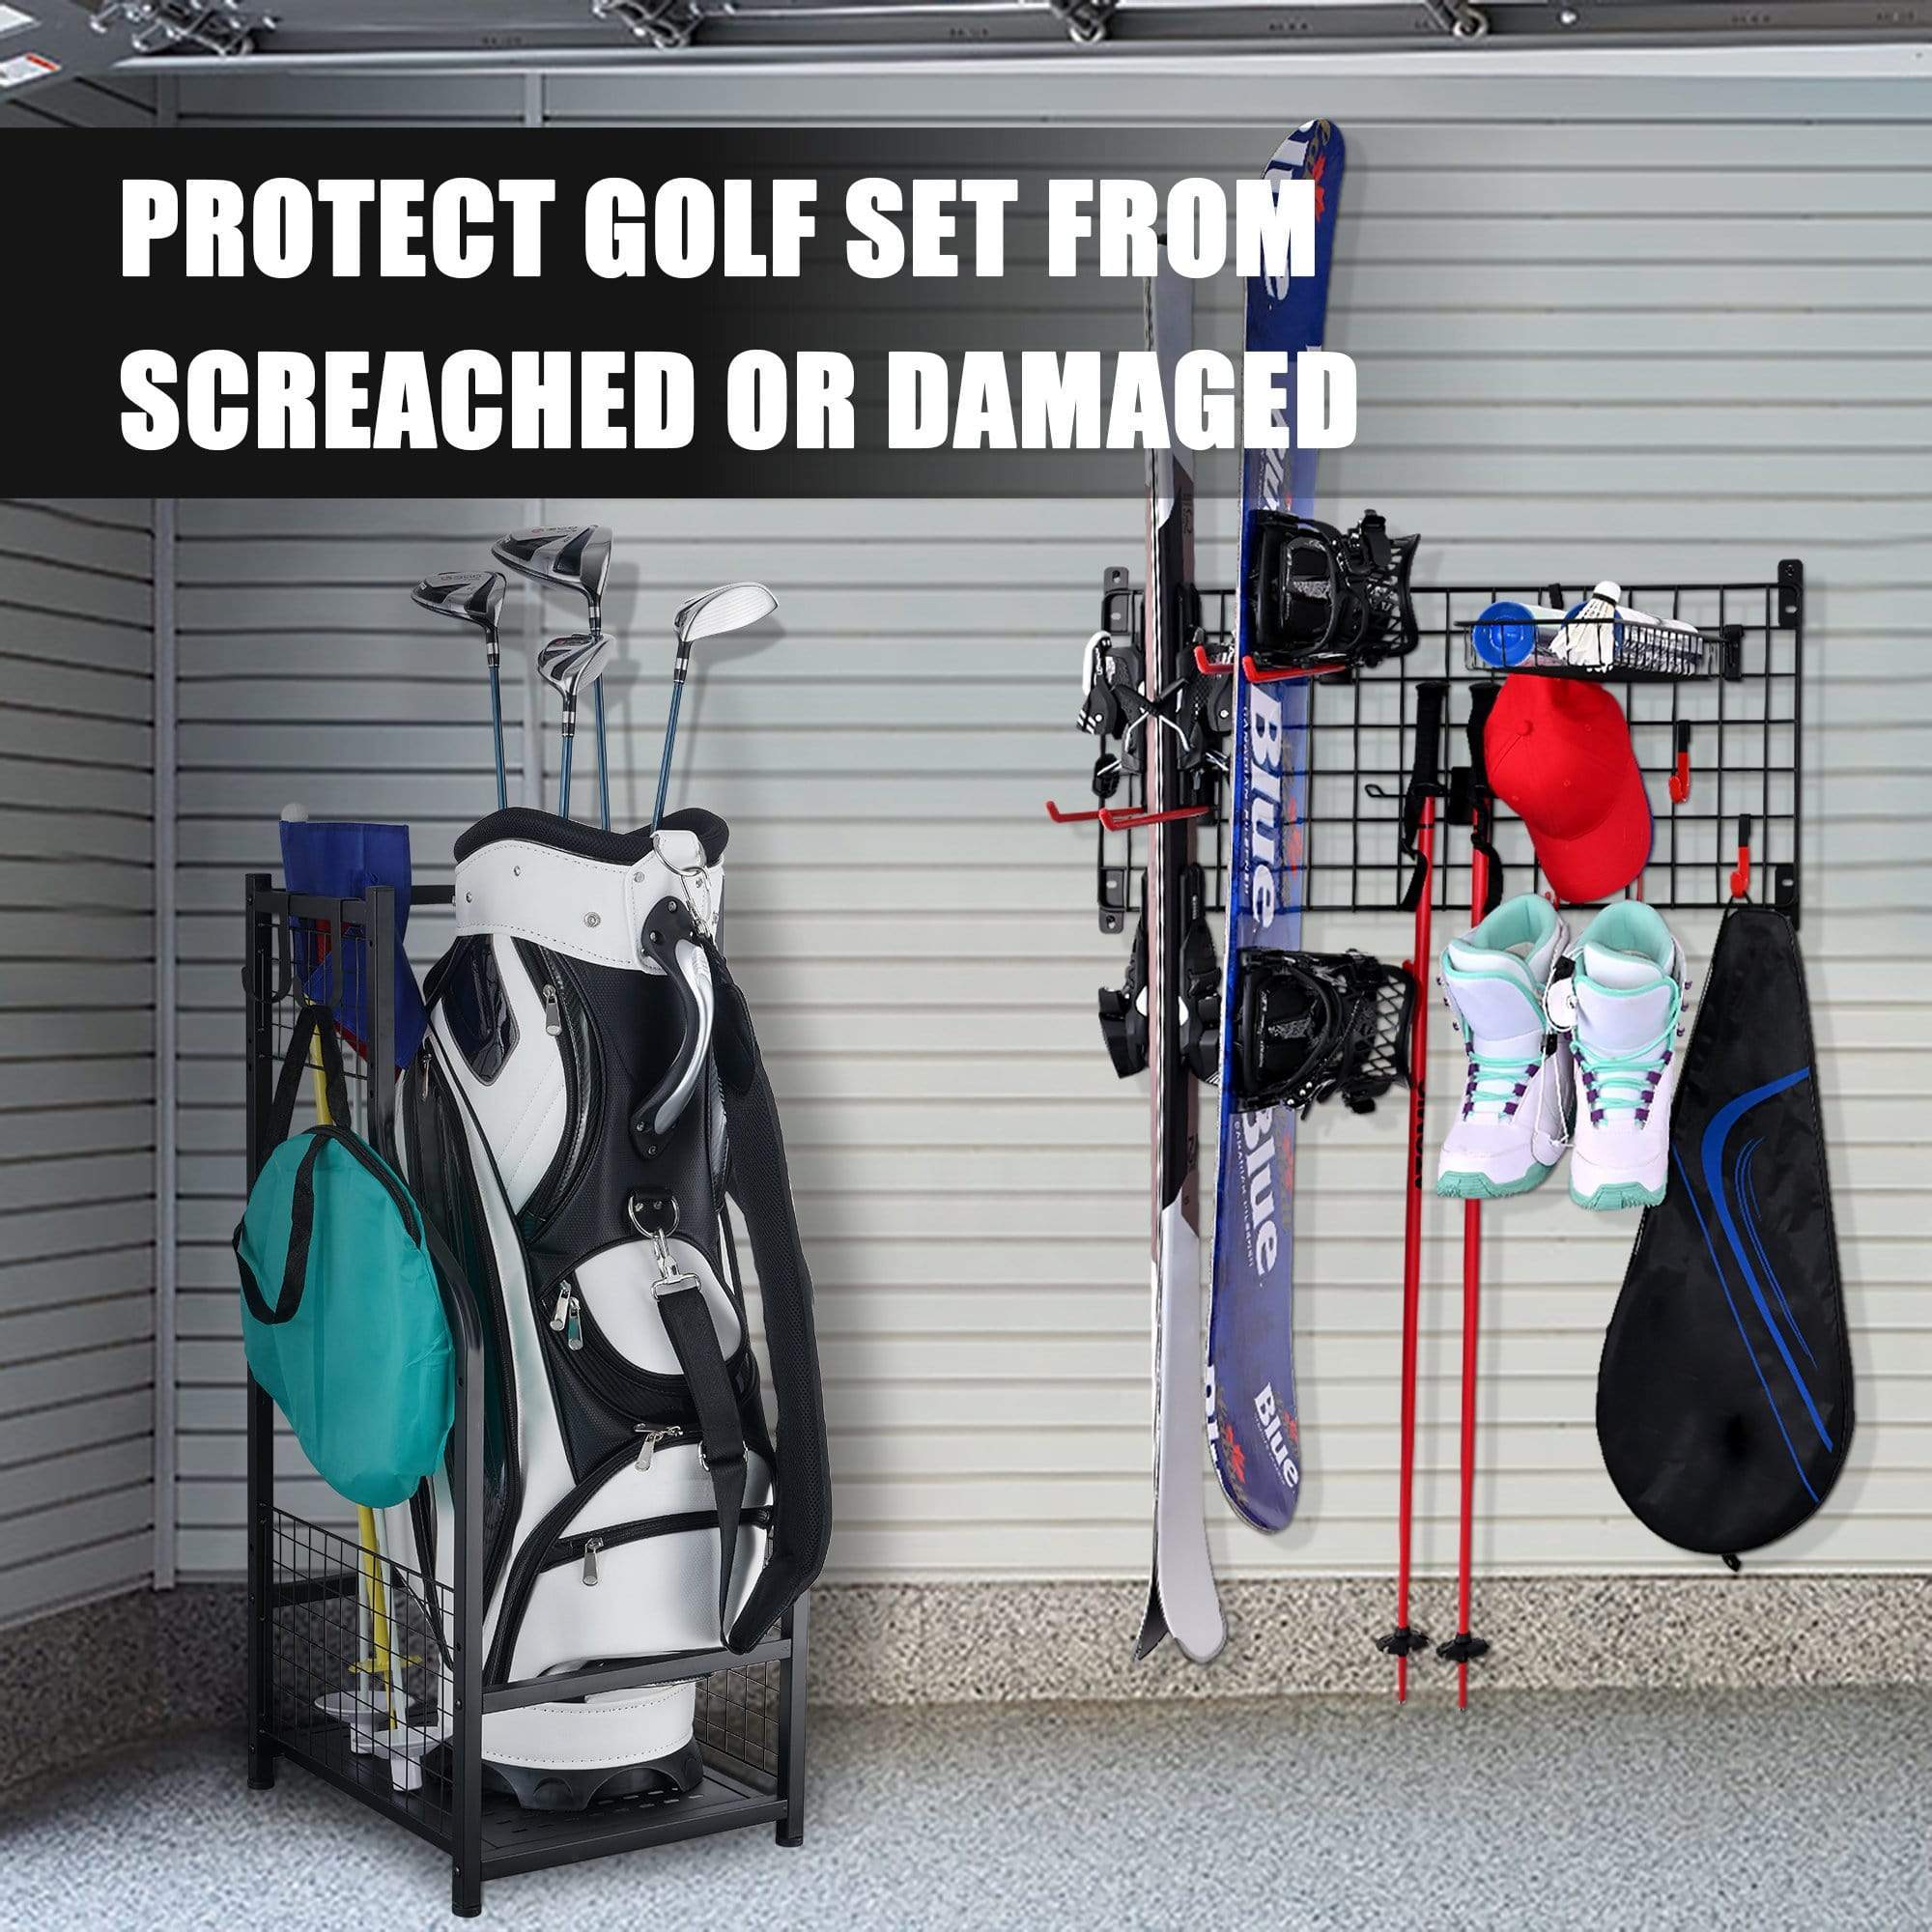 Mythinglogic Garage & Storage Golf Bag Rack